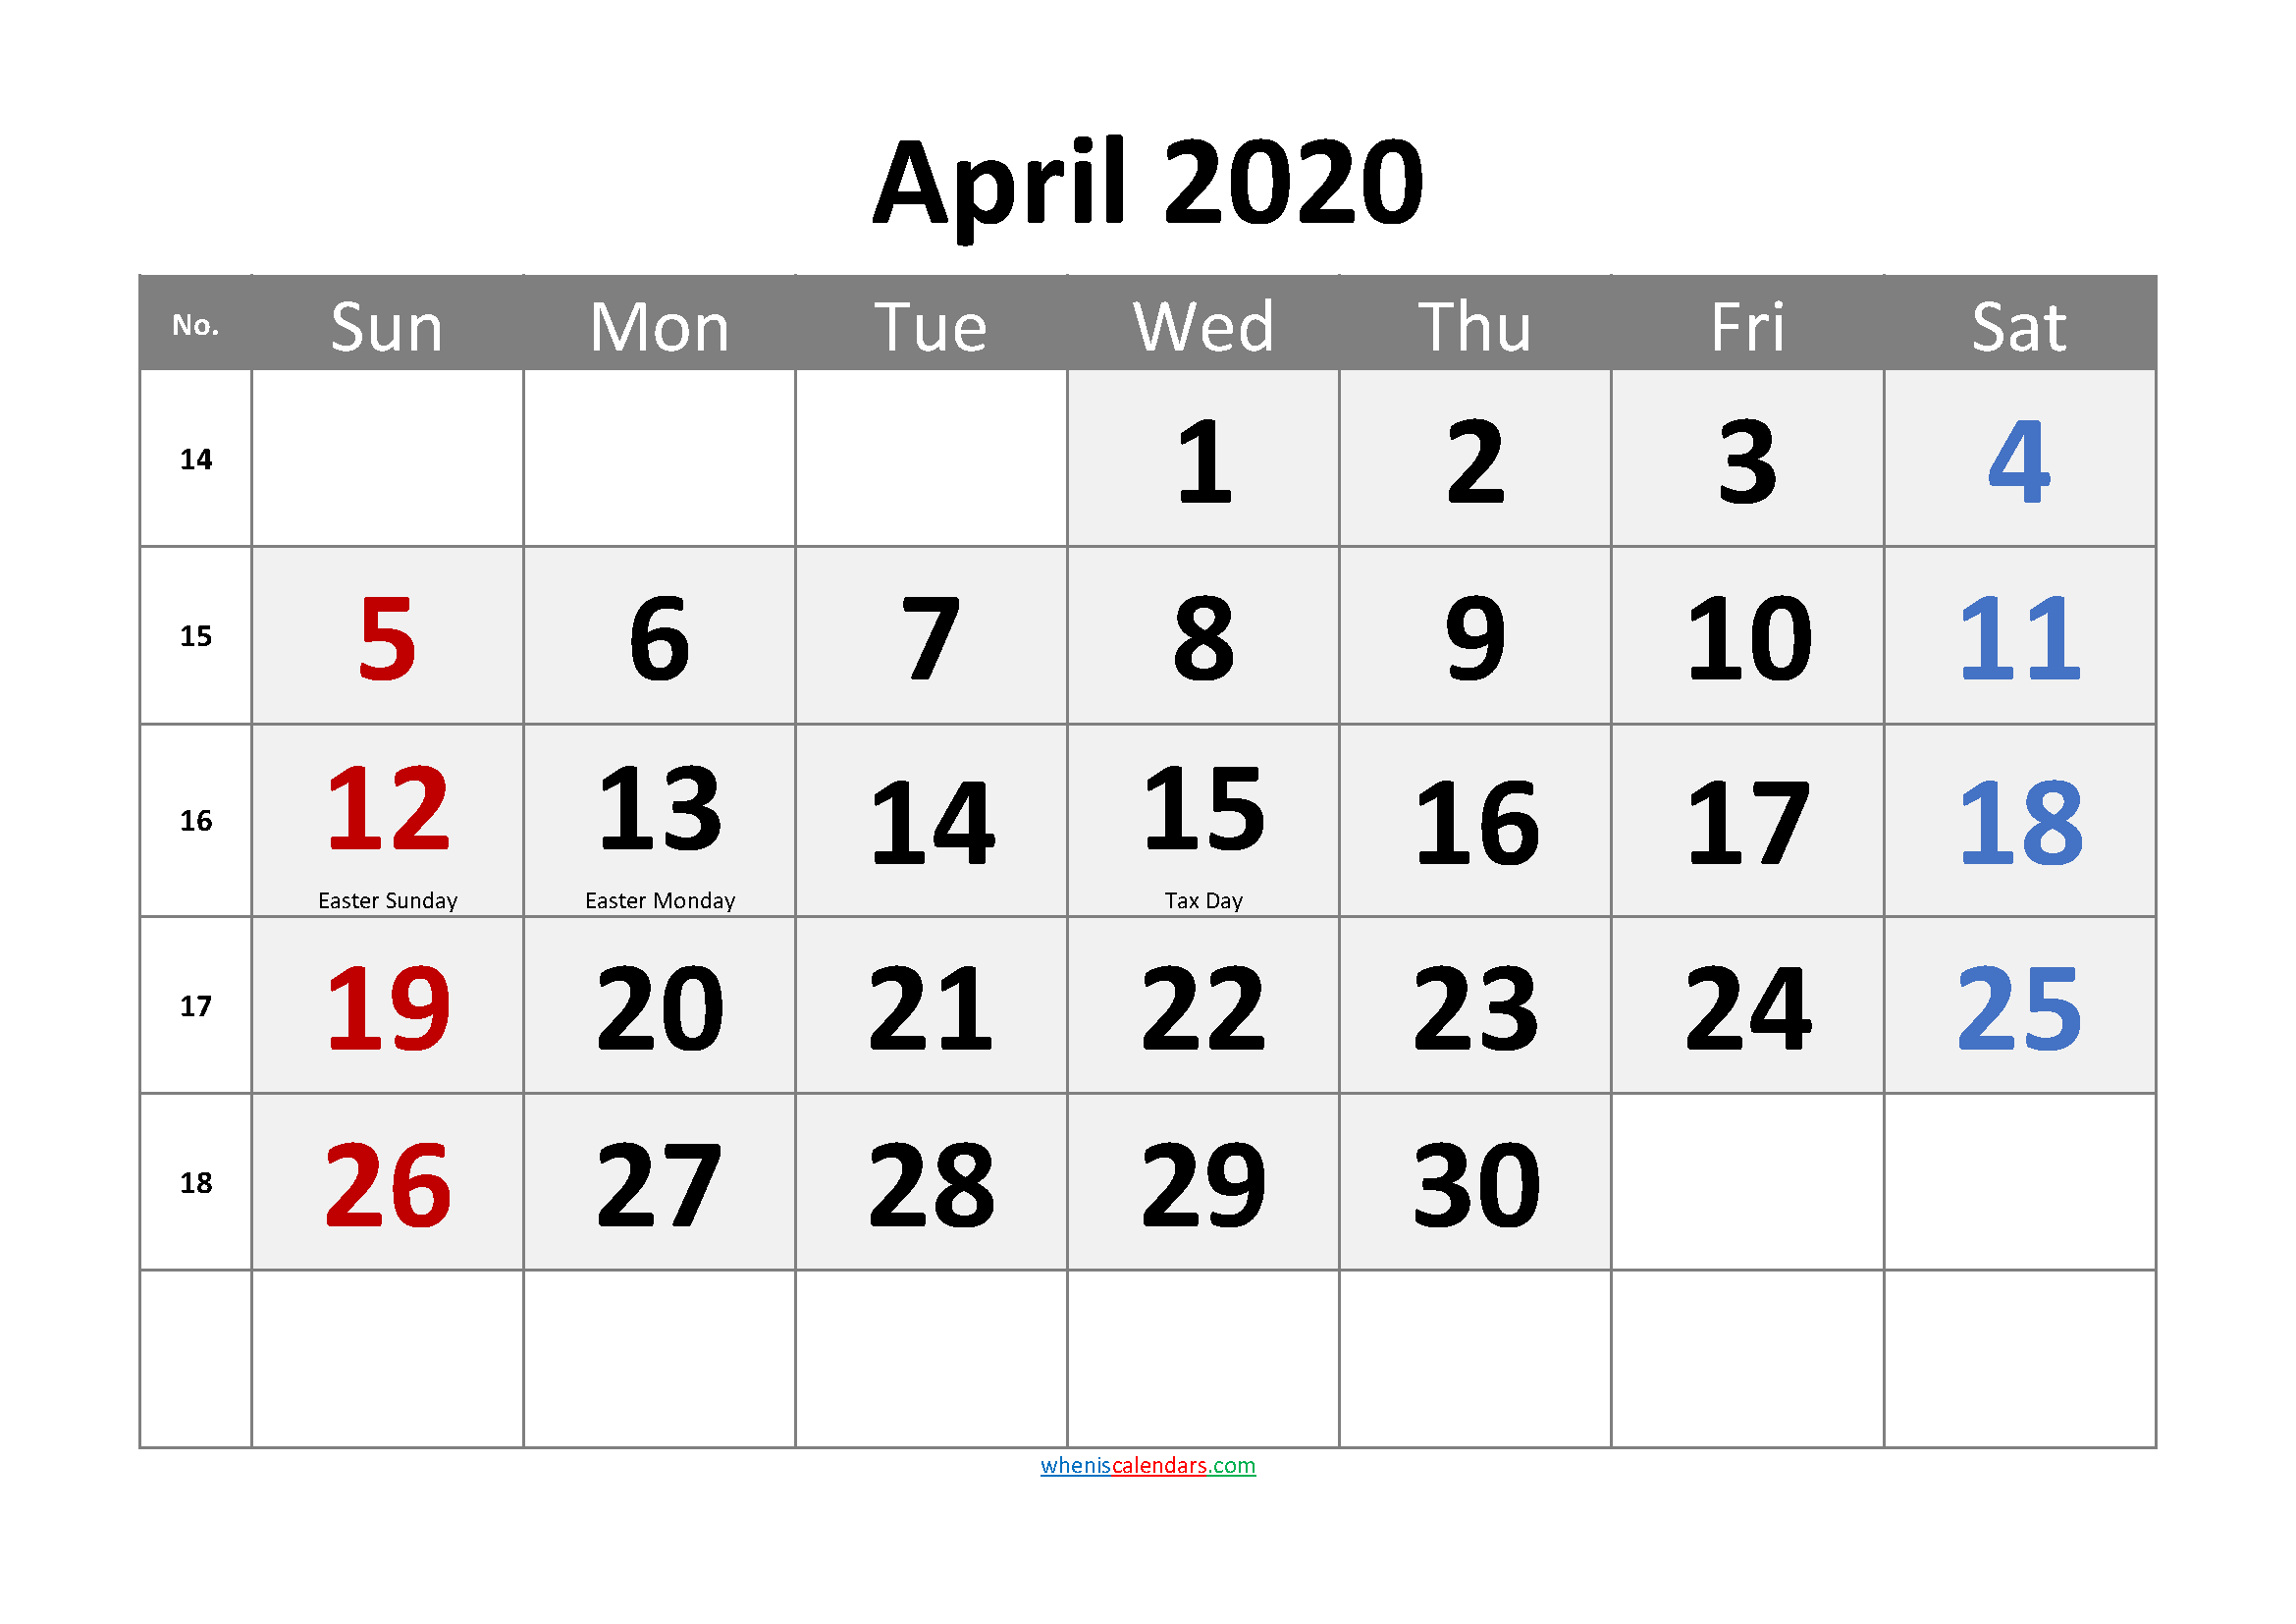 APRIL 2020 Printable Calendar with Holidays